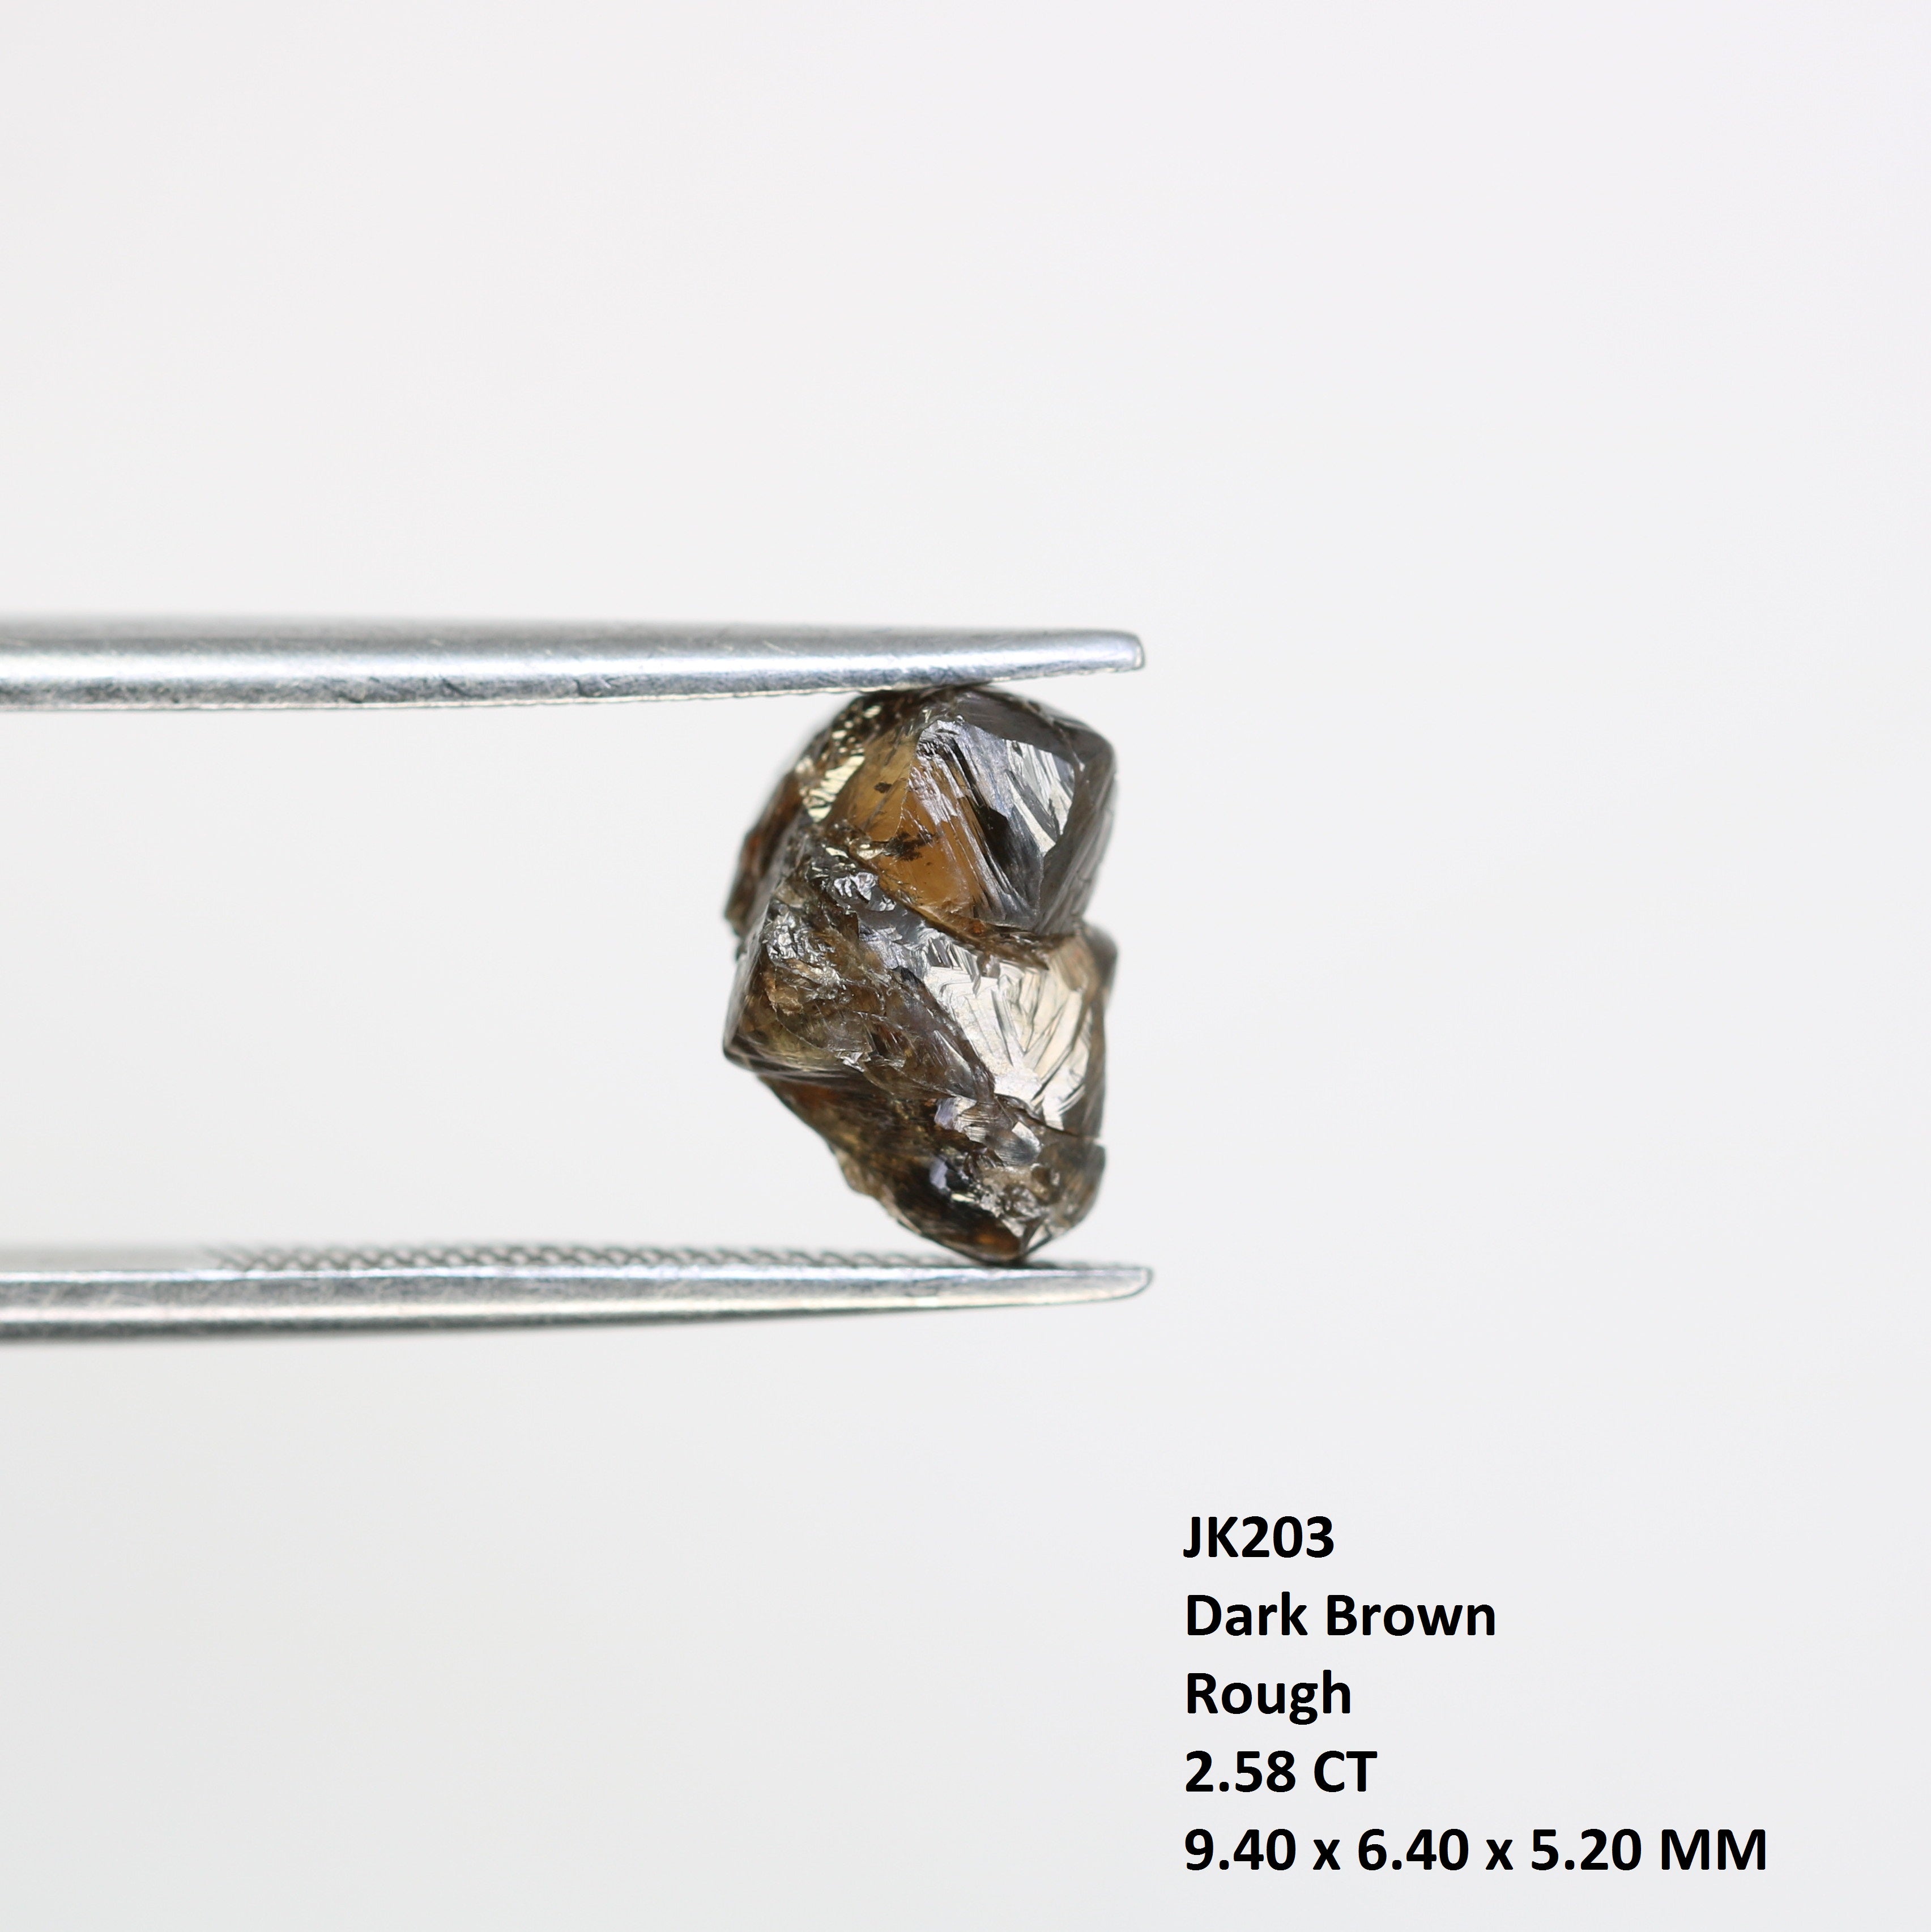 2.58 CT Rough Raw Uncut Dark Brown Diamond For Engagement Ring